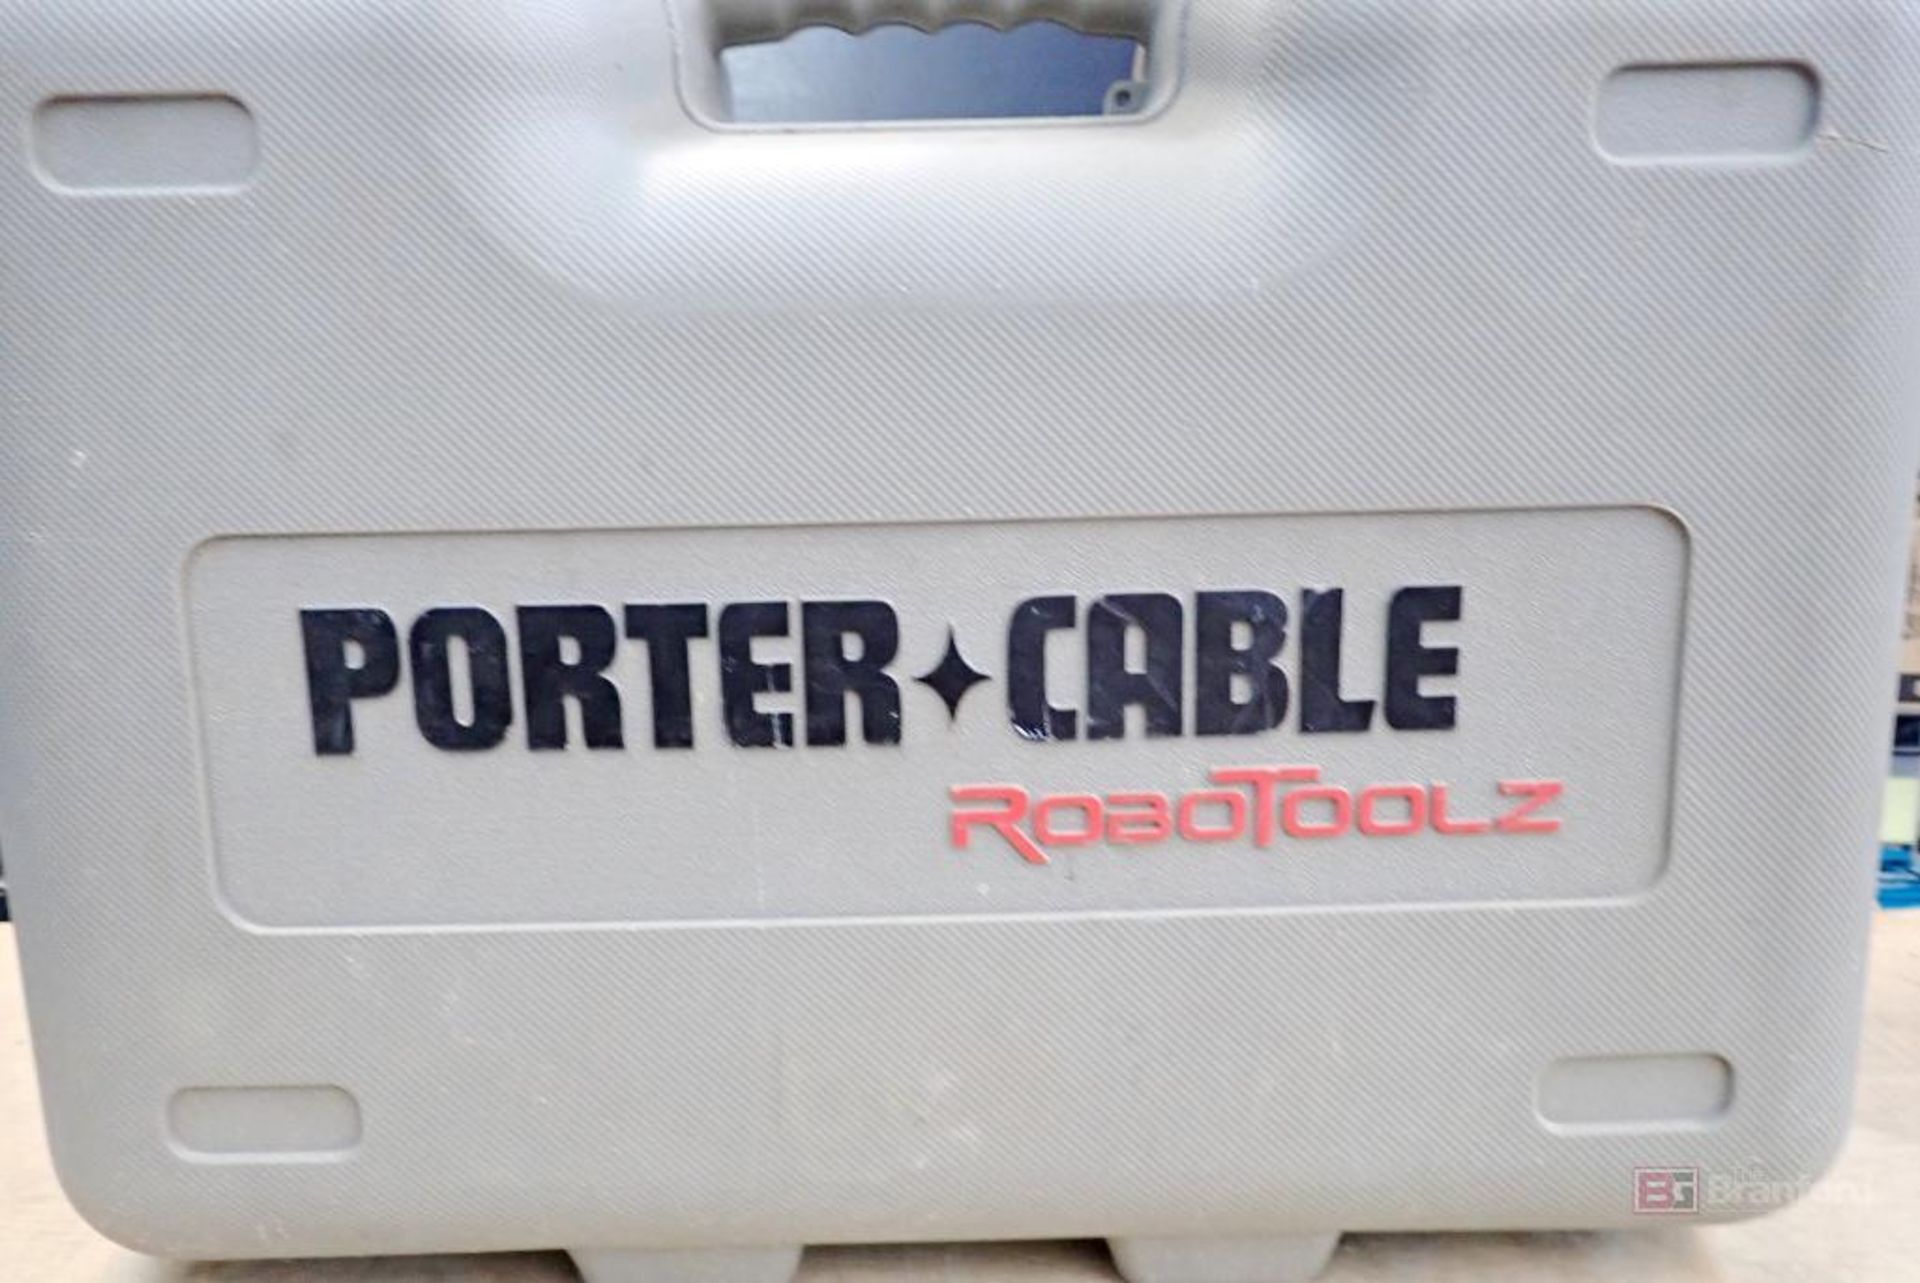 Porter Cable RT-7690-2 RoboToolz Laser Level - Image 4 of 4